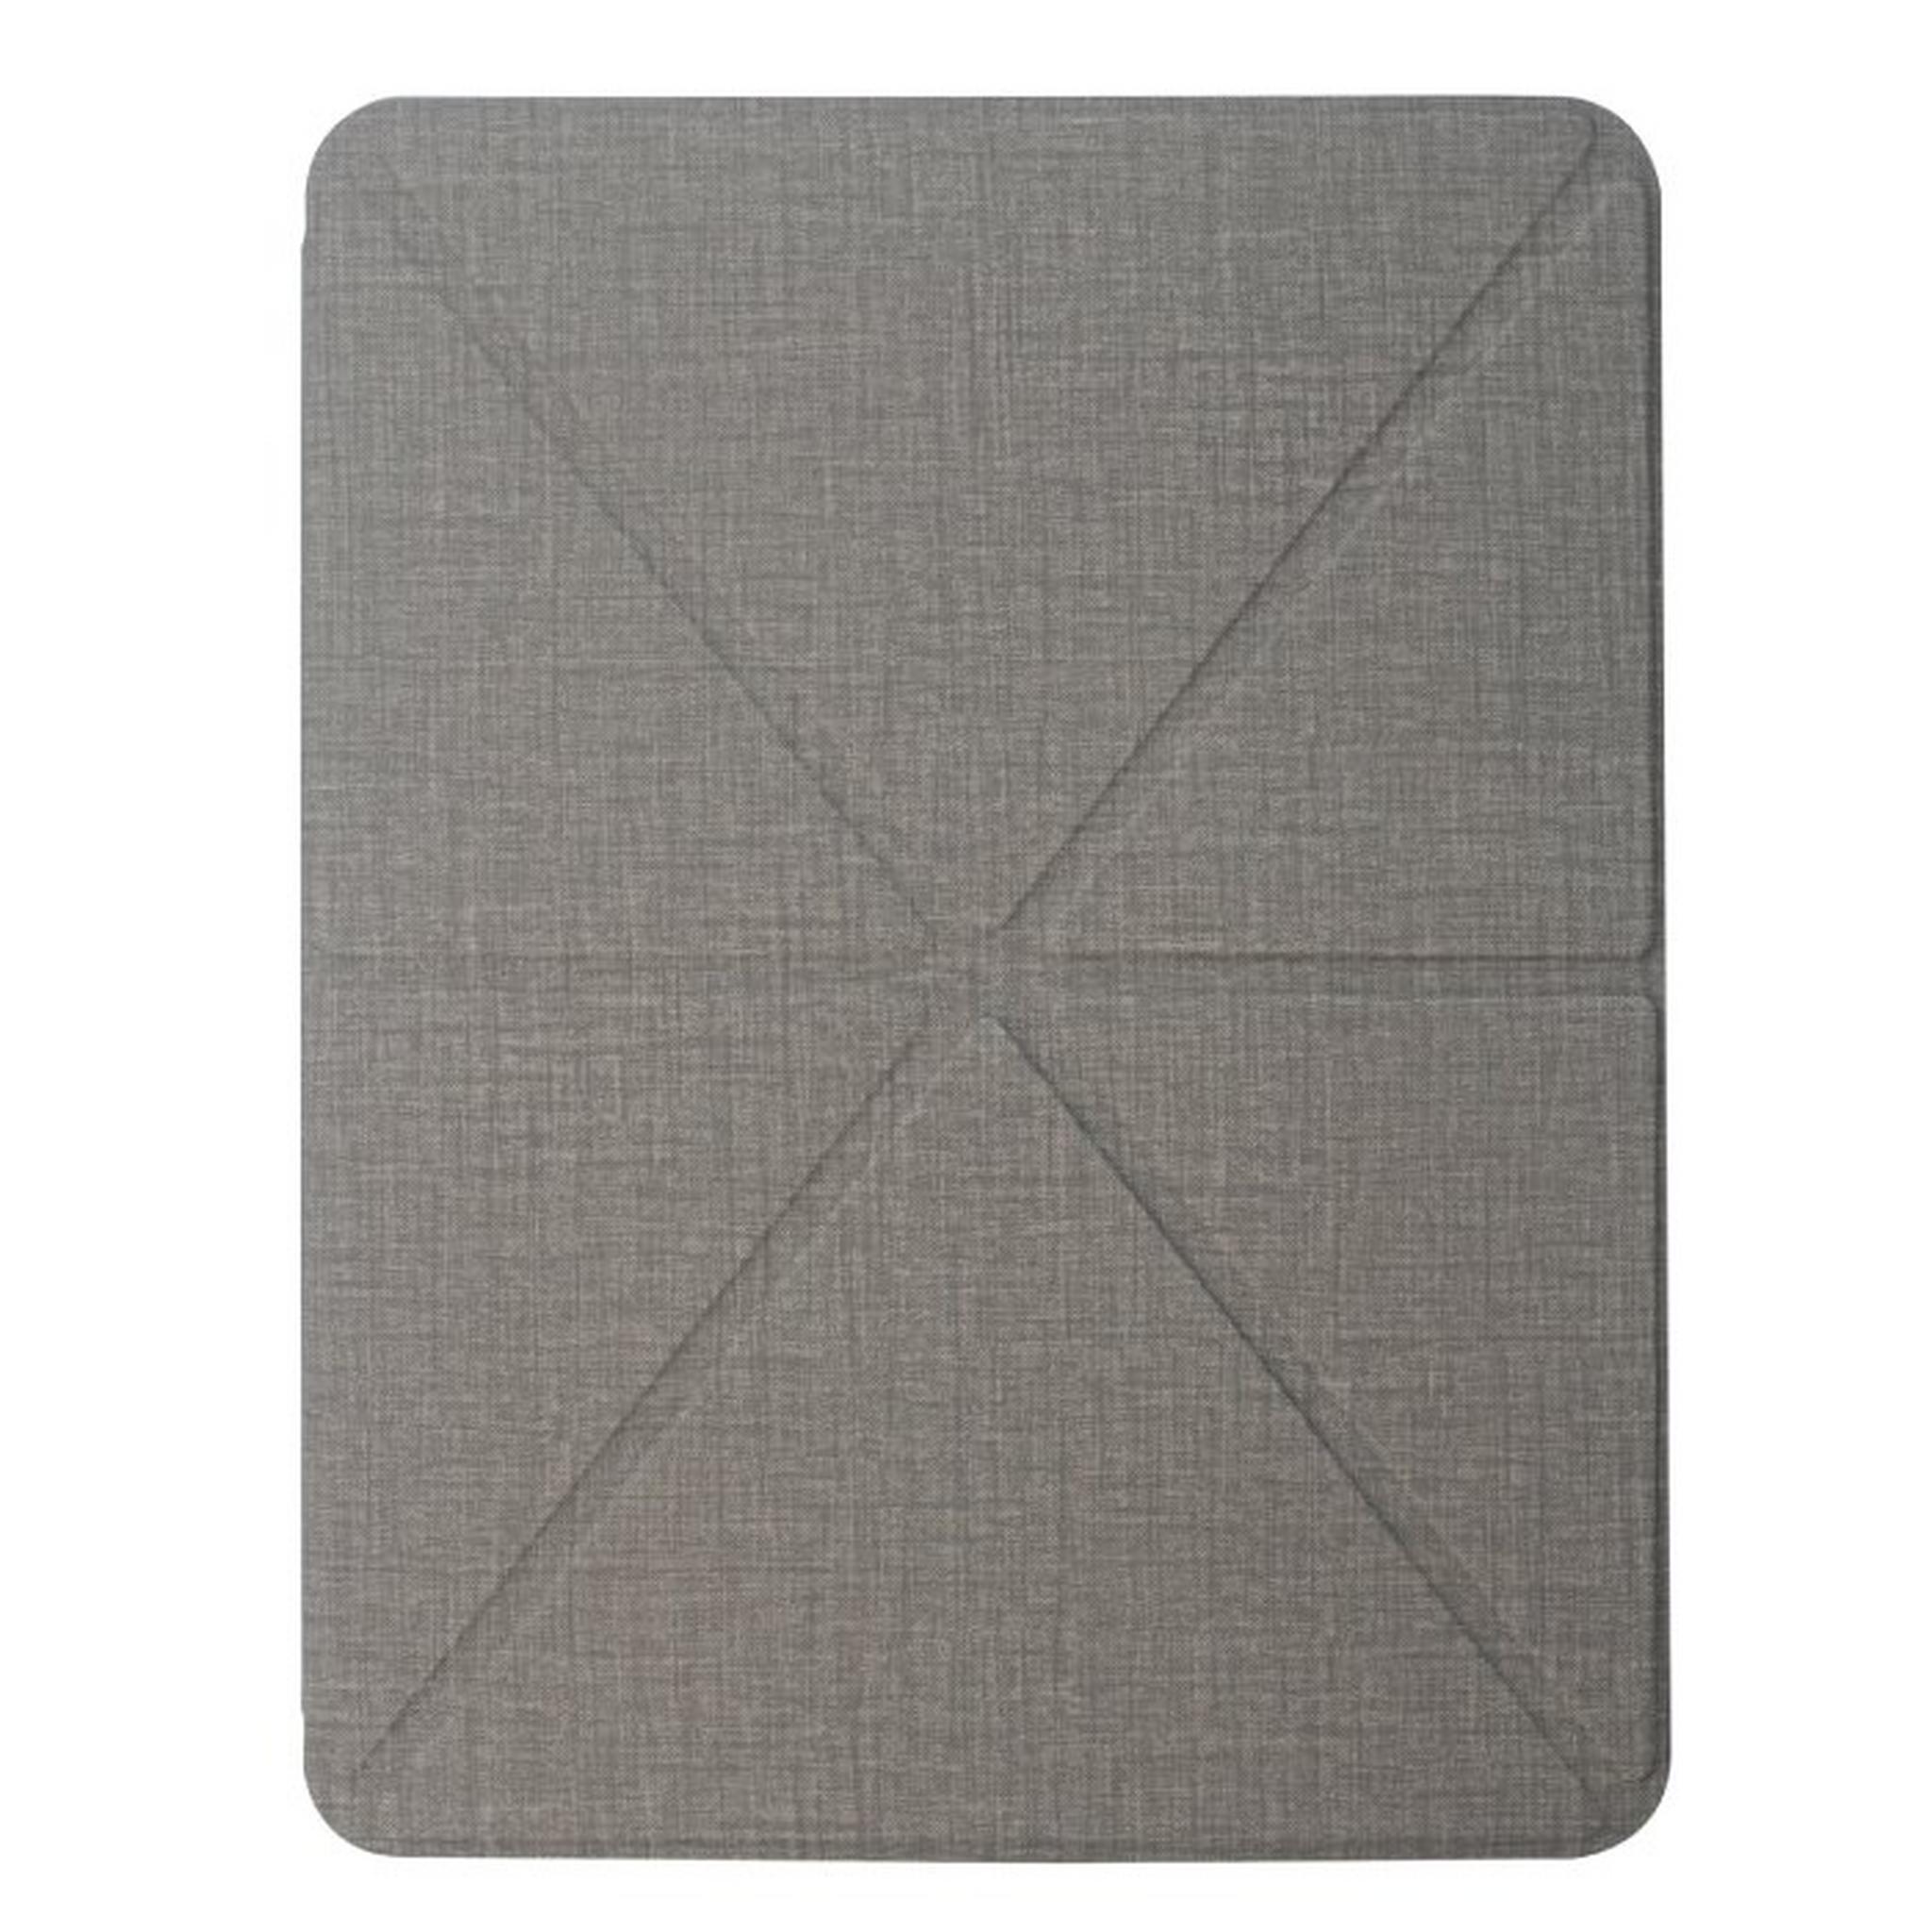 EQ Mebric Case For iPad Pro 11 inch - Grey